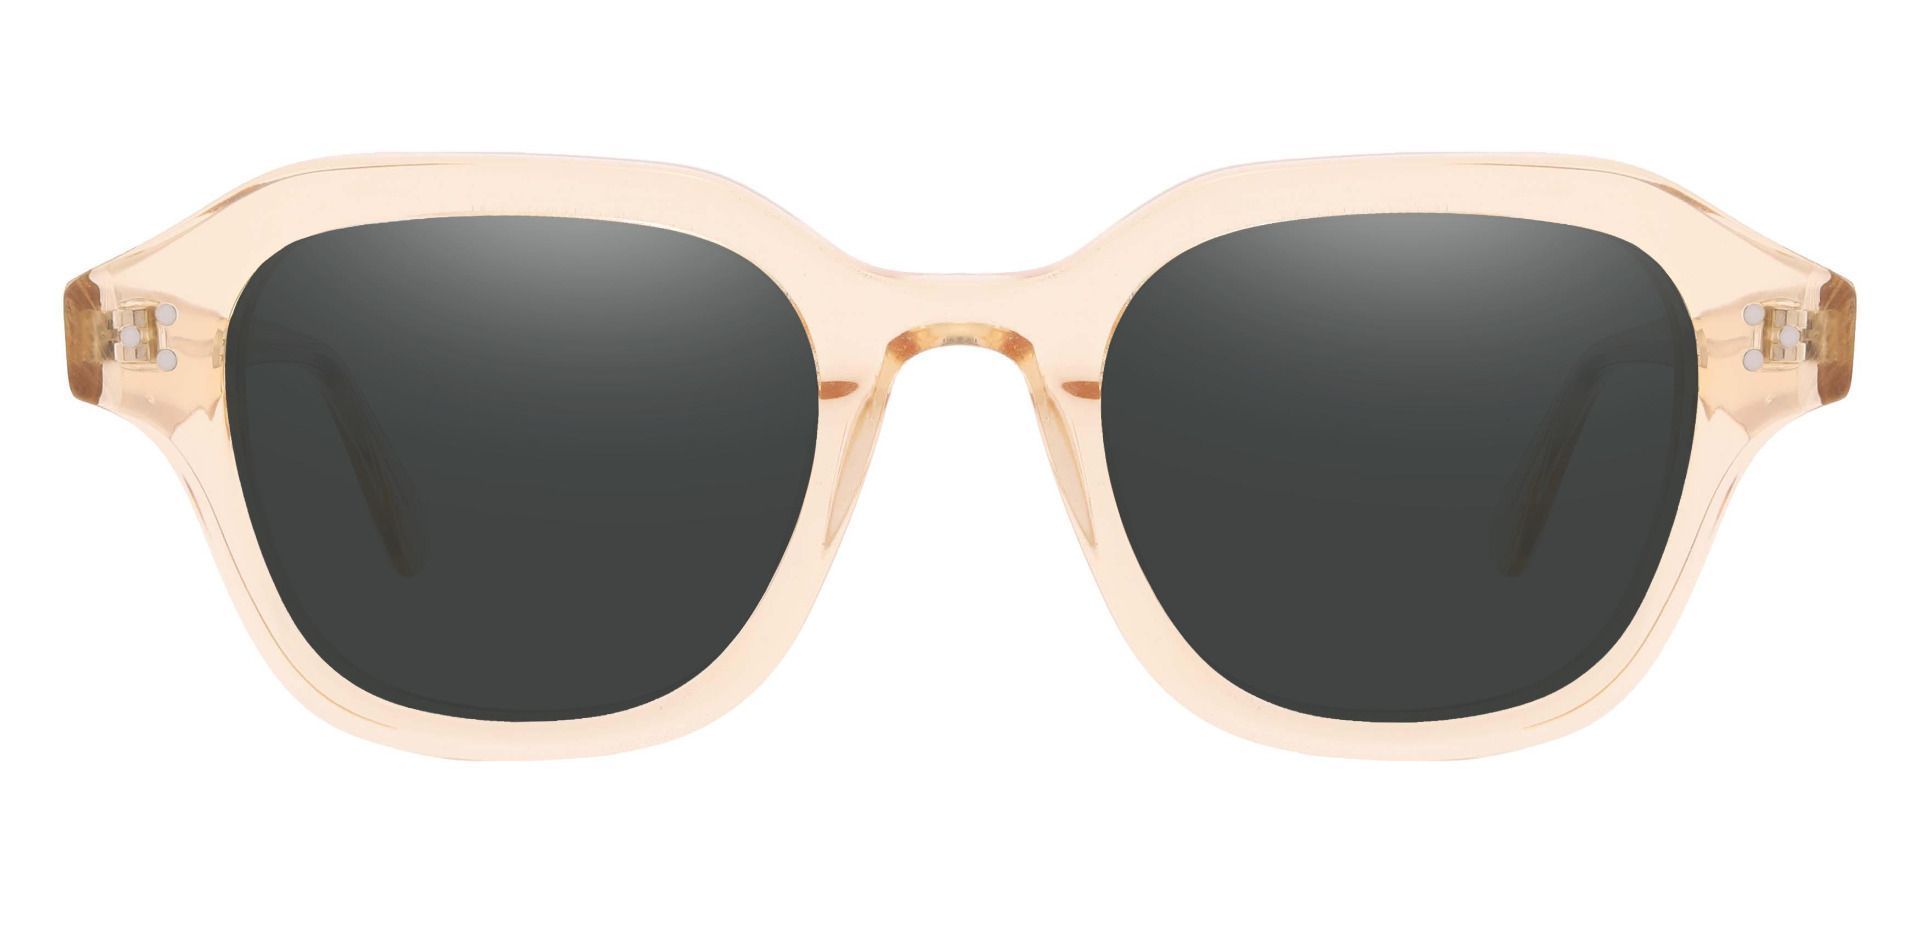 Bowman Square Prescription Sunglasses - Yellow Frame With Gray Lenses